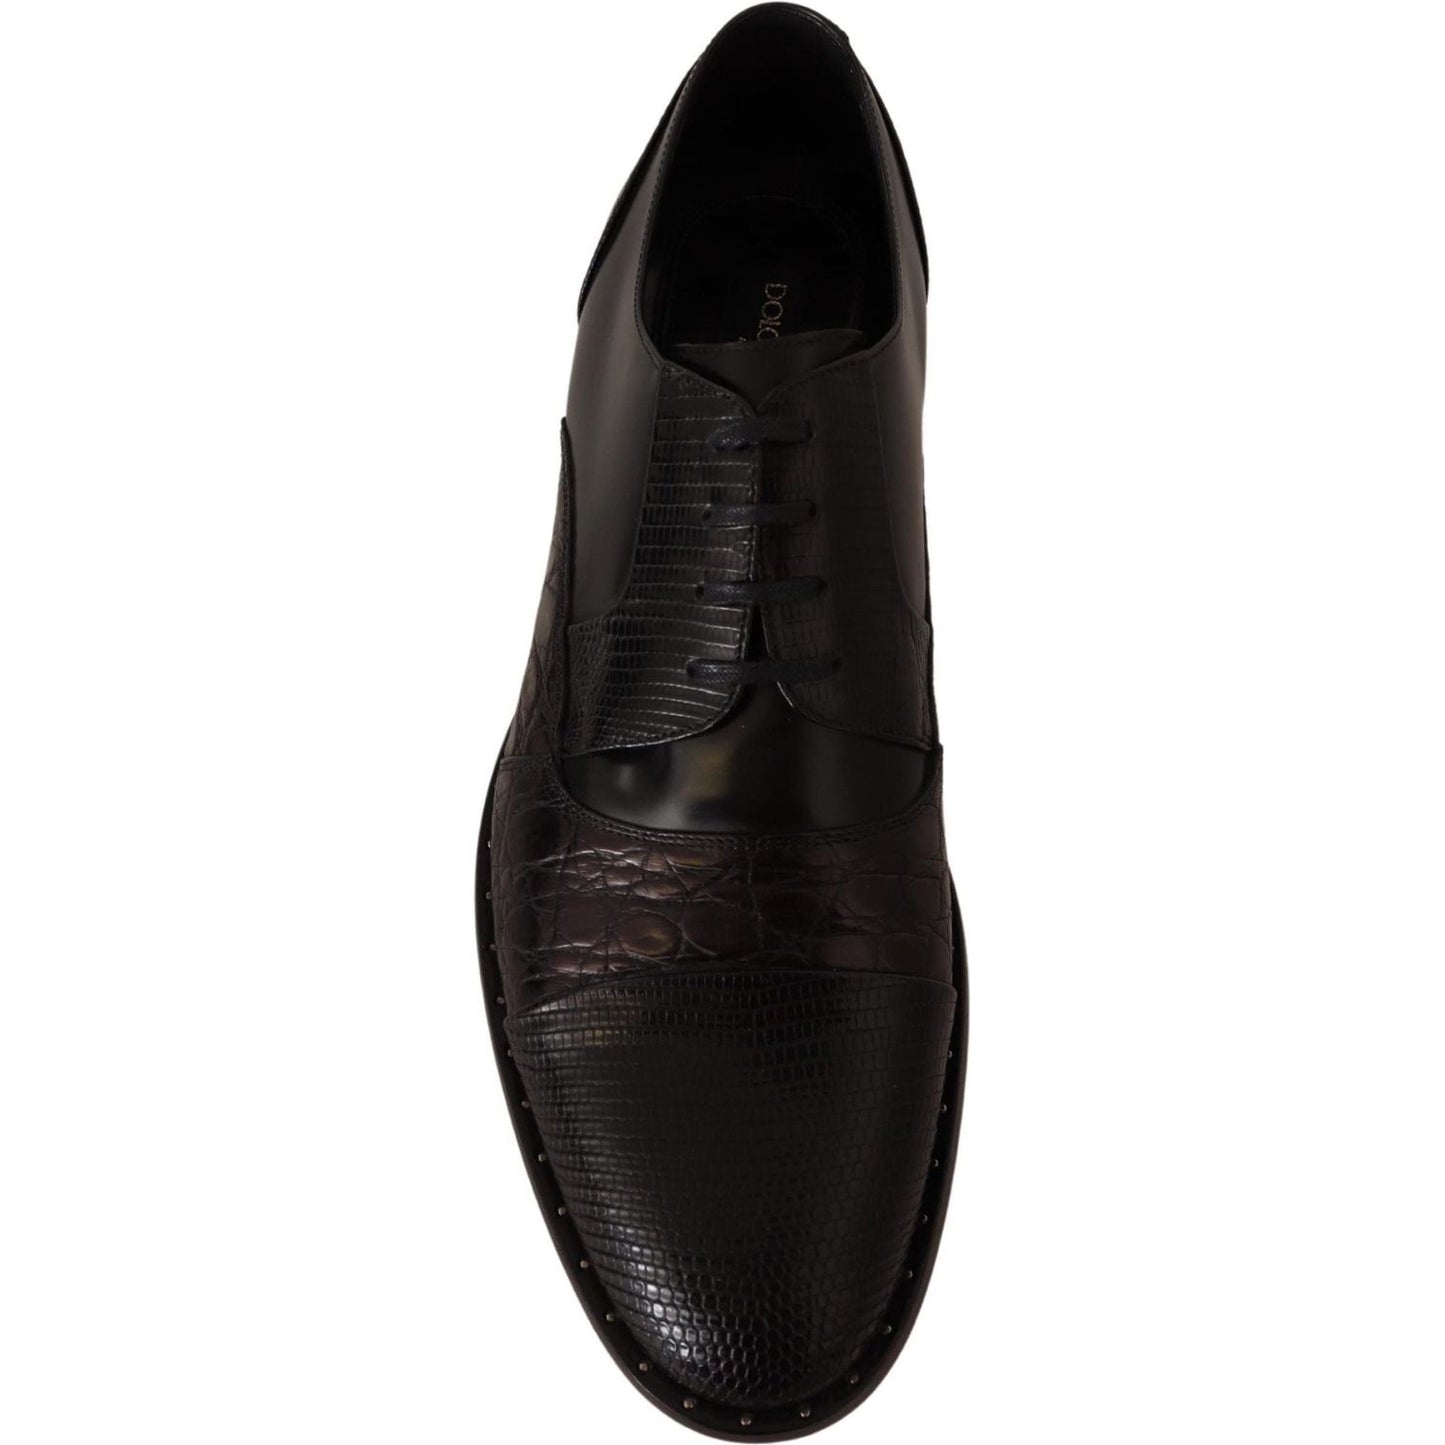 Dolce & Gabbana Elegant Black Derby Oxford Wingtips black-leather-exotic-skins-formal-shoes IMG_5317-scaled-6dfd0c02-11a.jpg